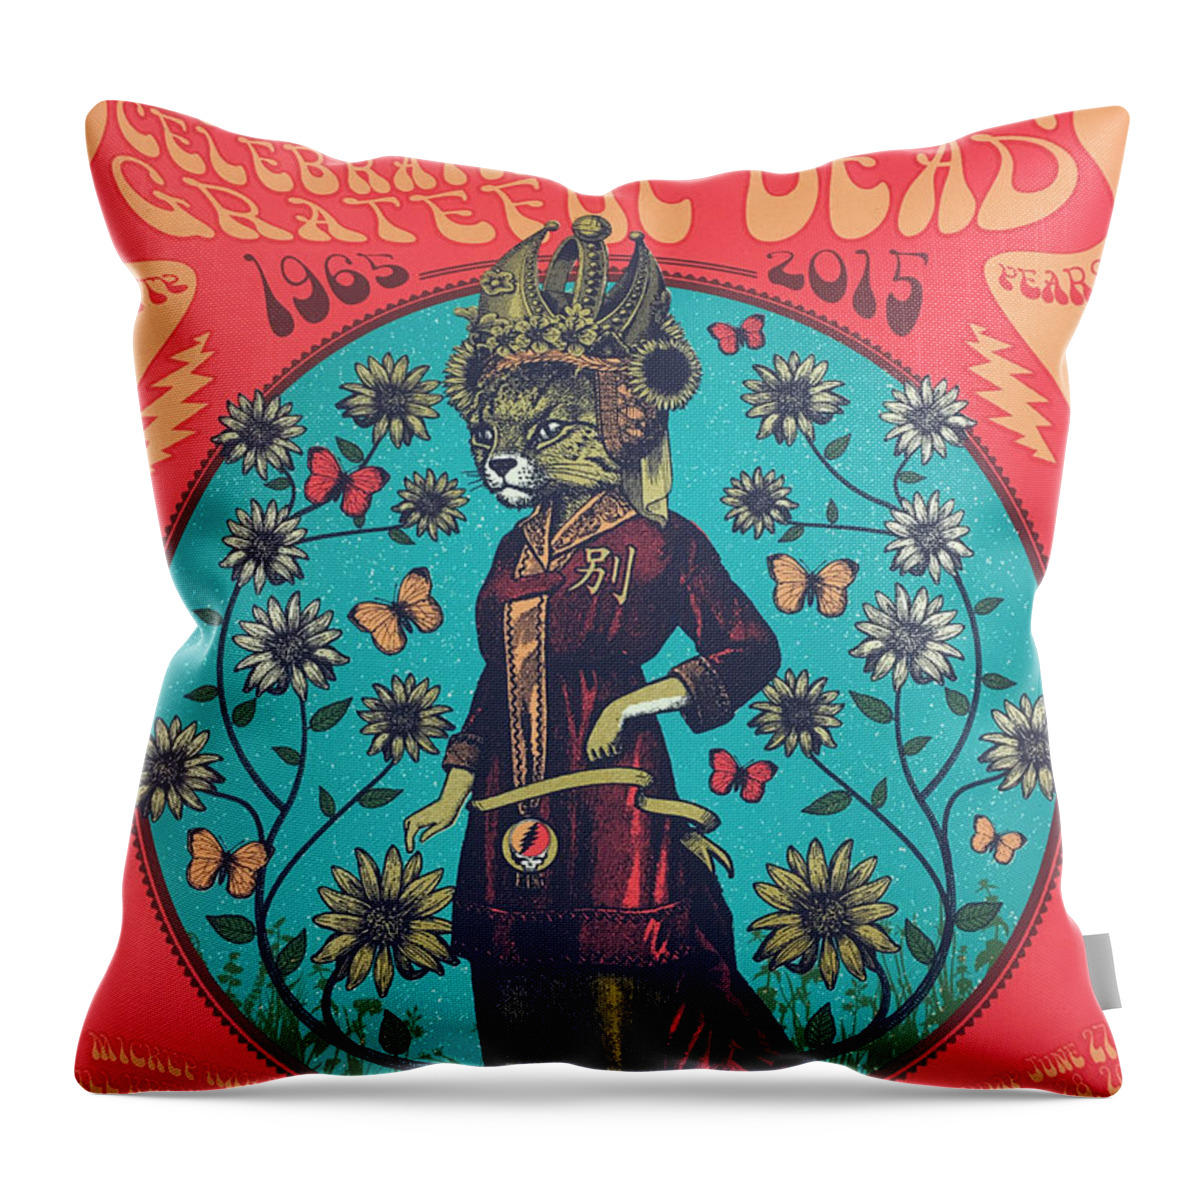 Grateful Dead Throw Pillow featuring the digital art Status Serigraph Grateful Dead Santa Clara Poster China Cat 2015 by Sophie Locke